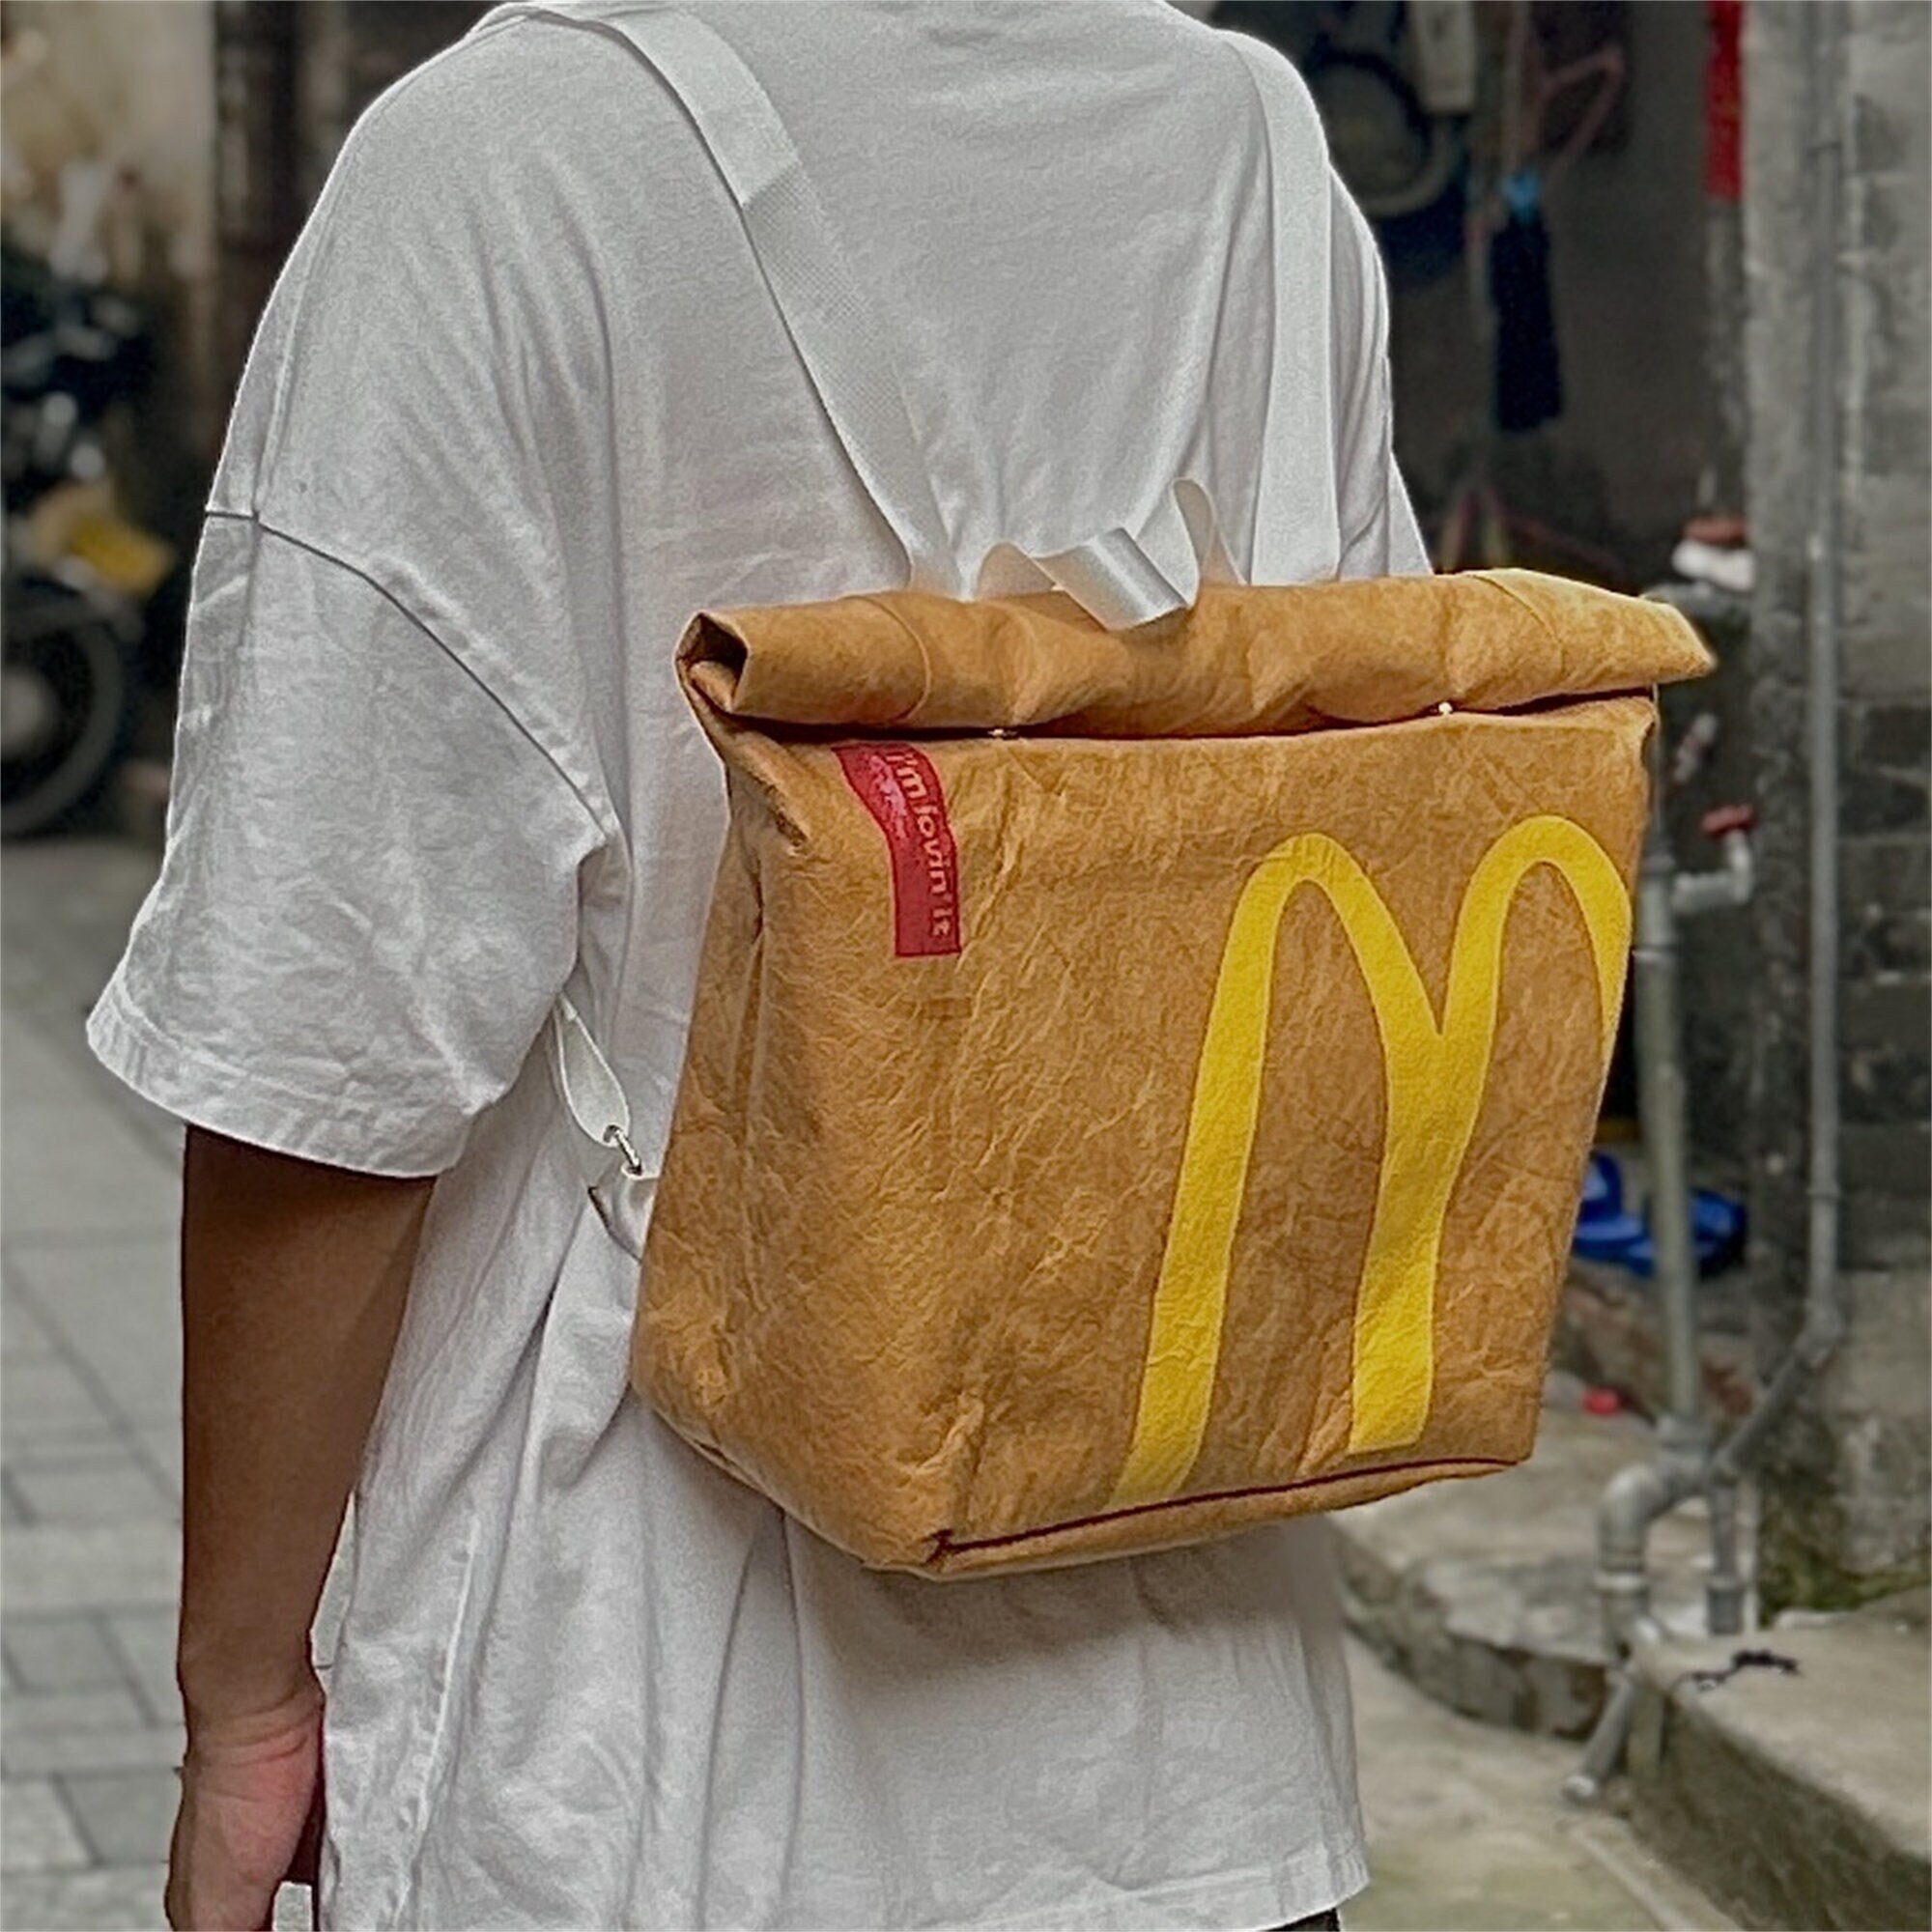 McDonald's French Fries Crossbody Purse